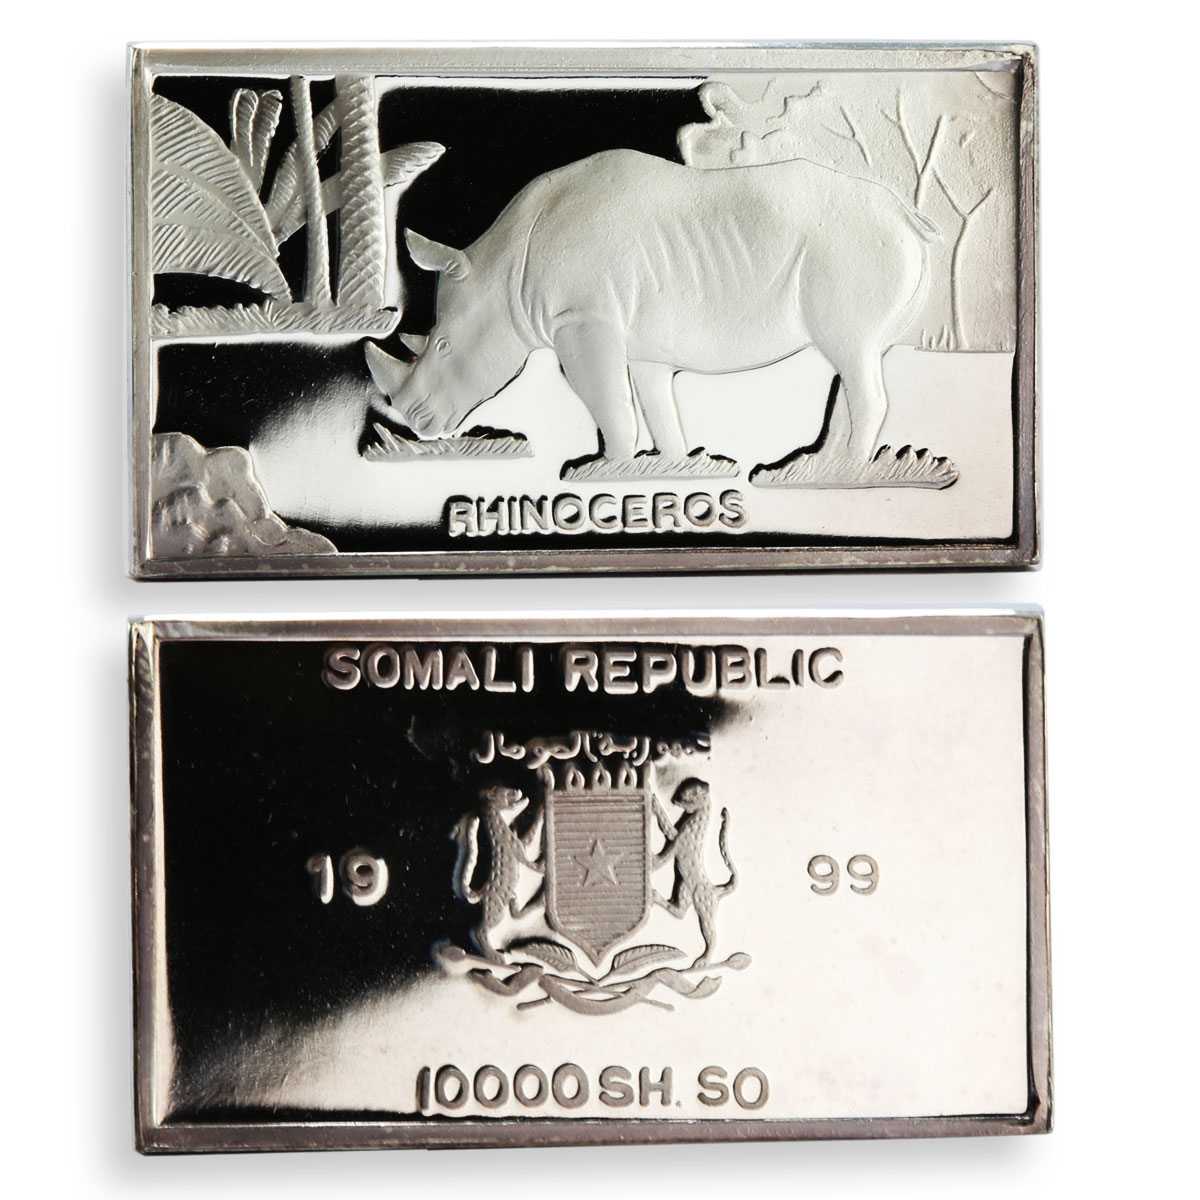 Congo Benin Togo Sahara Chad Somalia Set of 6 Animal fauna coins silver 1999